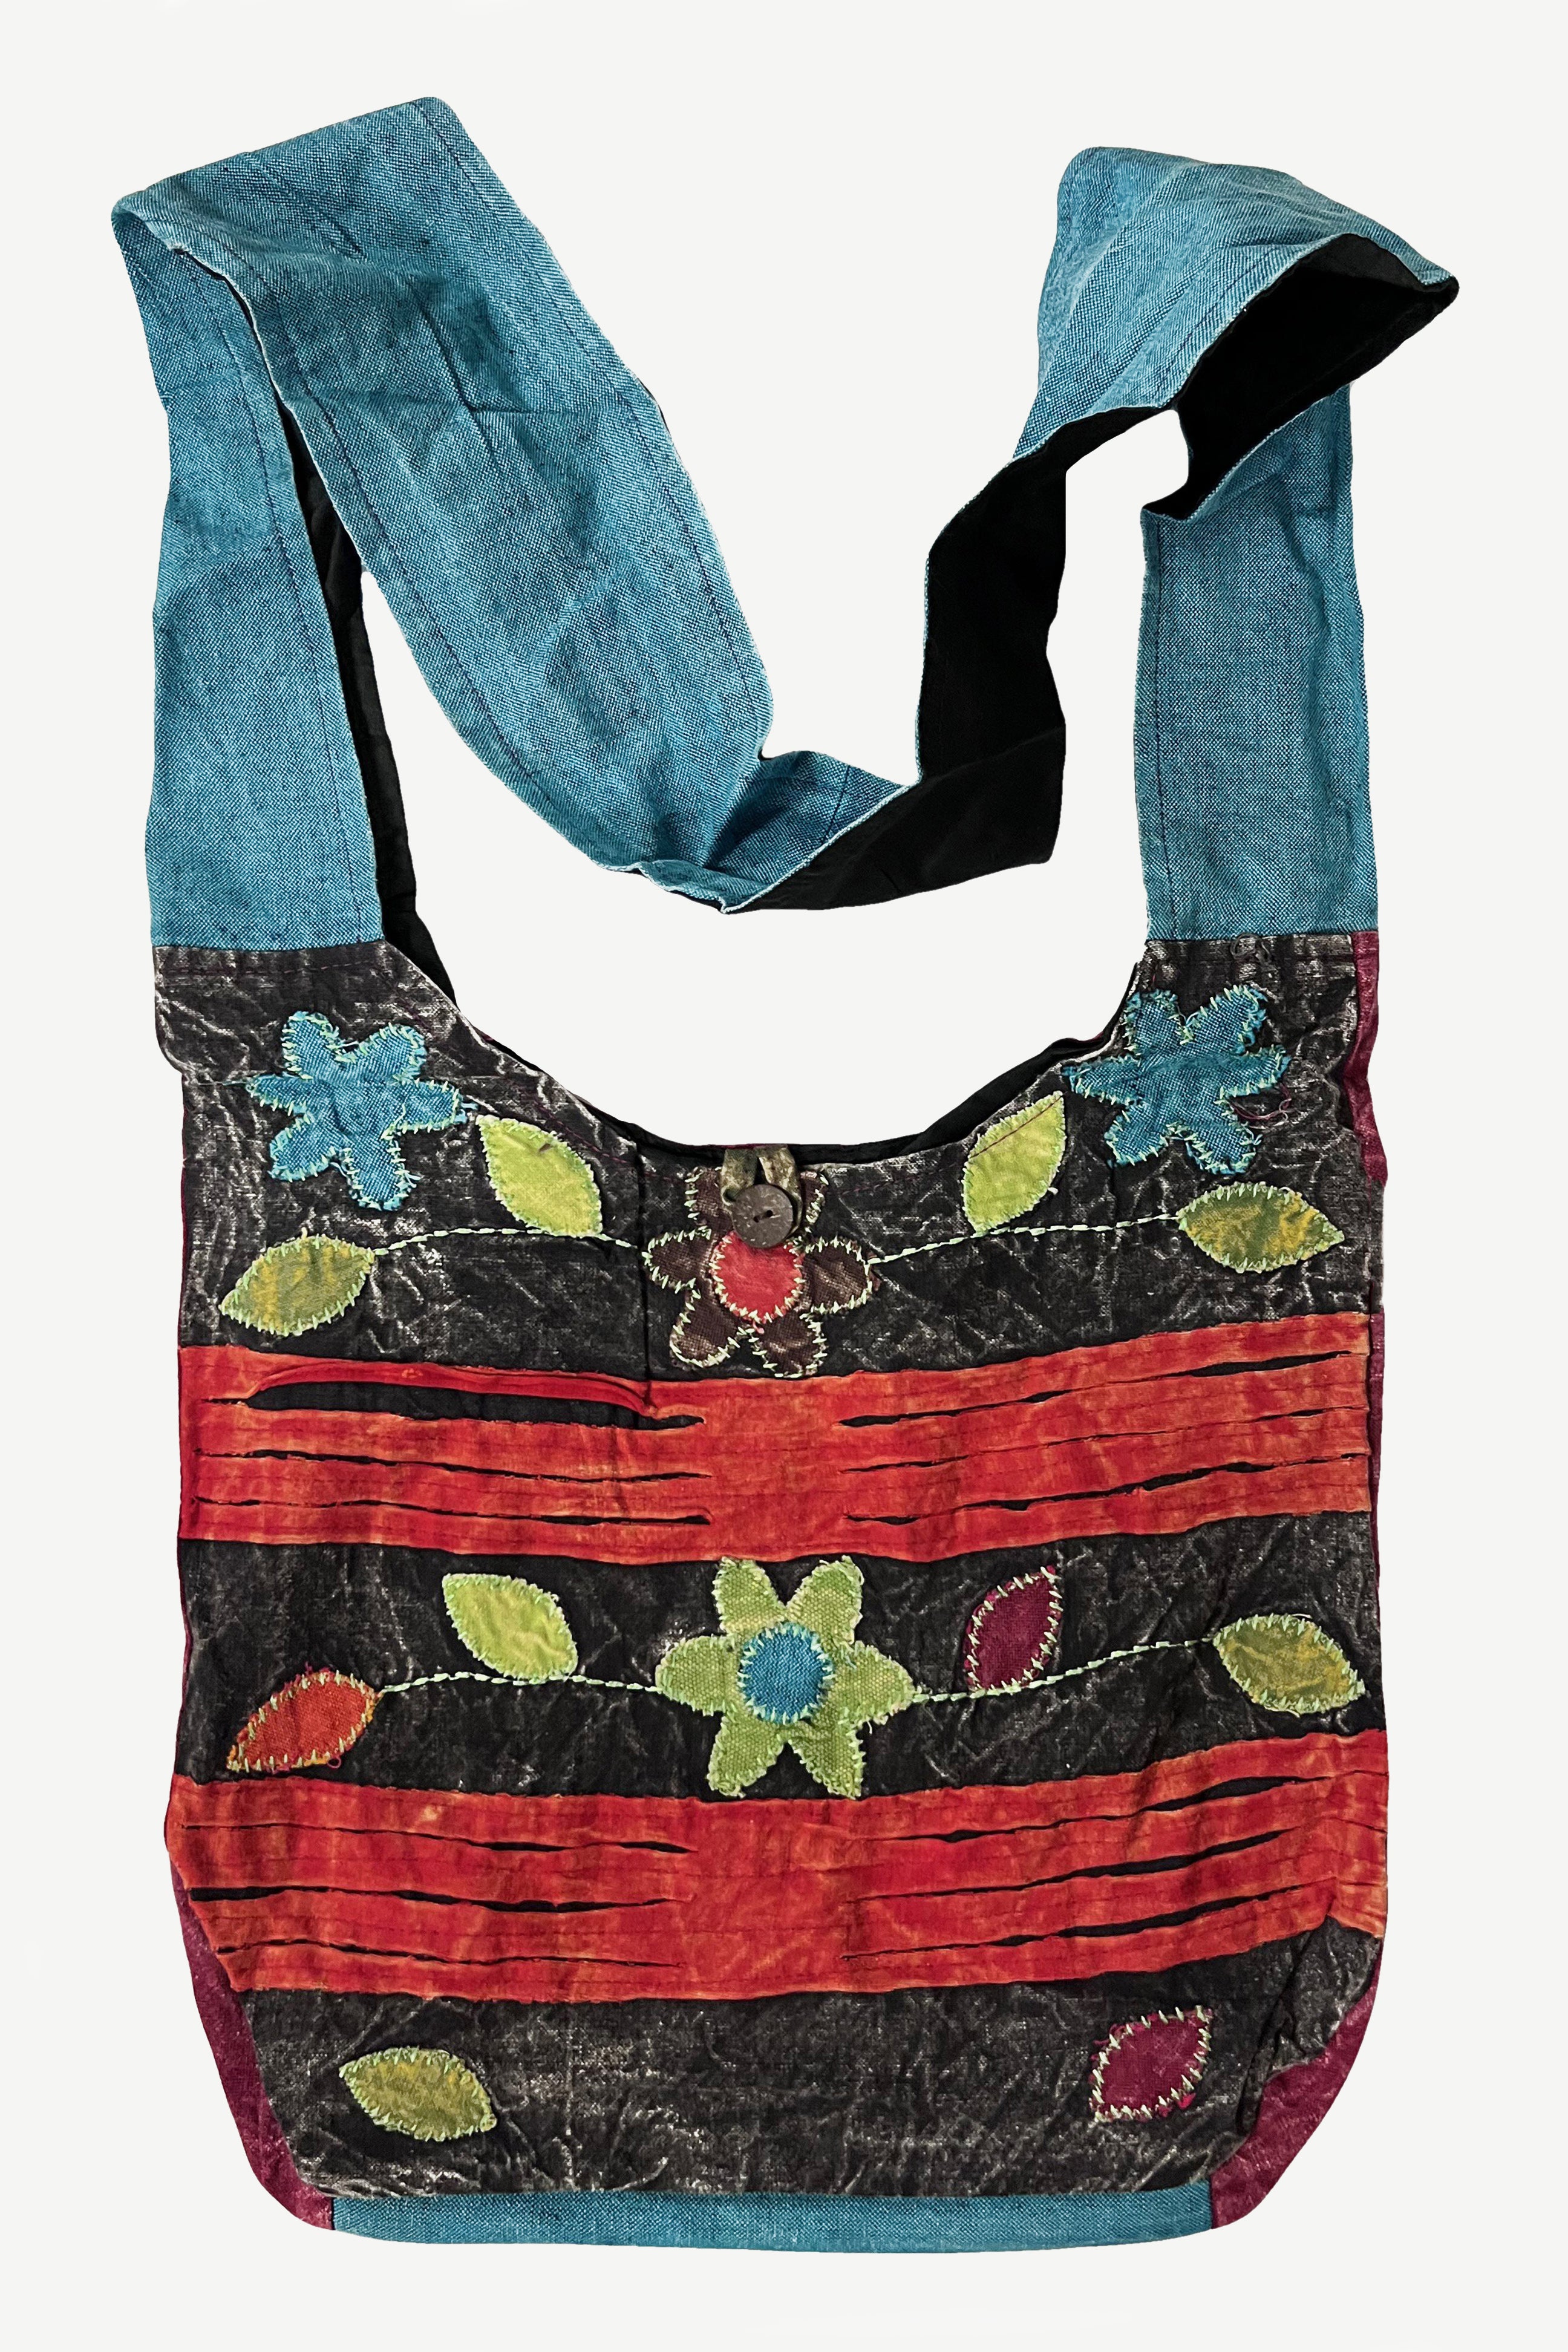 Handmade Purse Cross Body Bags Boho Bag Hippie Bohemian